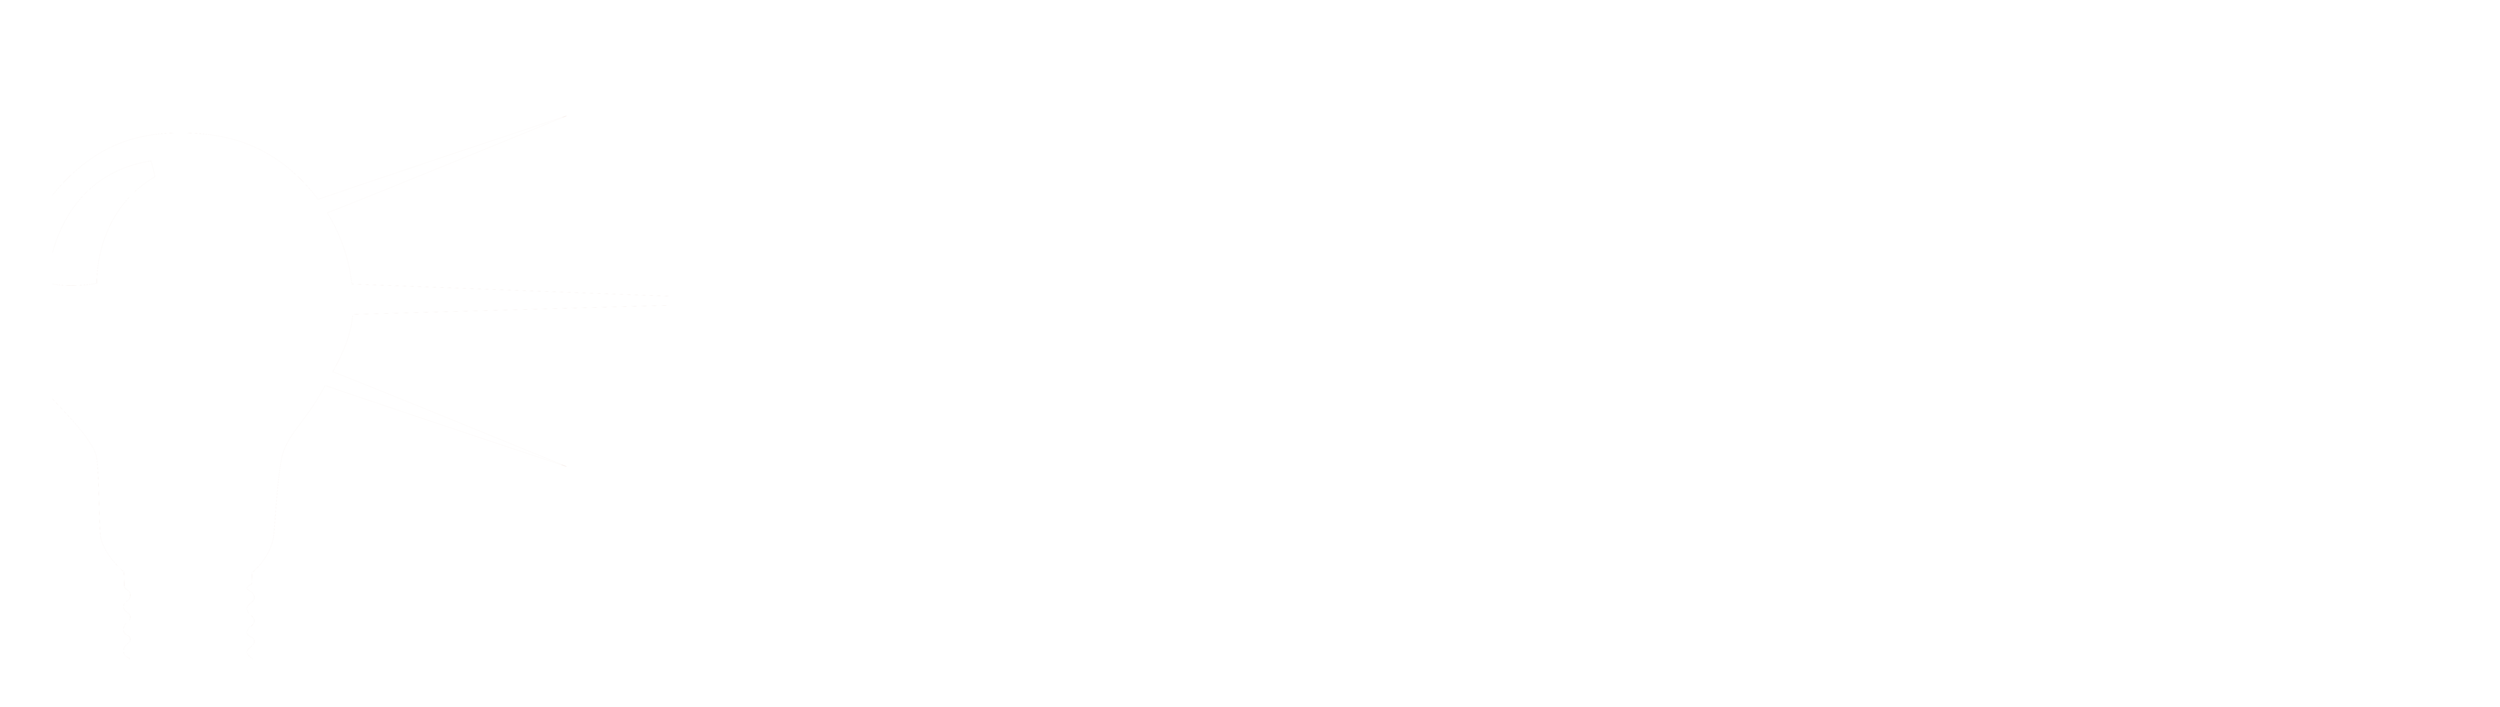 Association Solutions